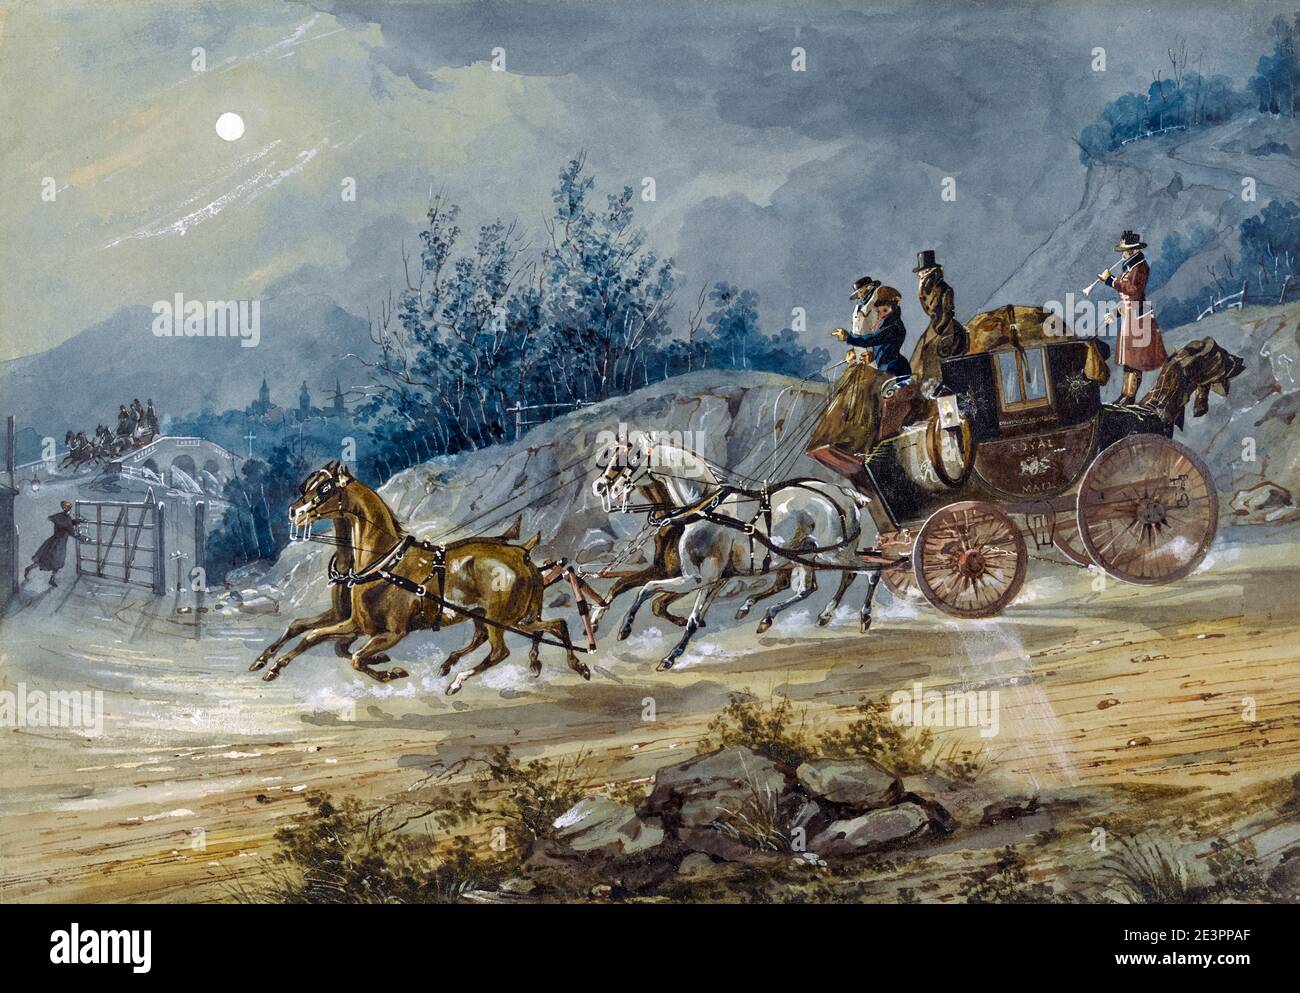 Il London-Dumphries (sic) Royal Mail allenatore e cavalli, dipinto di Charles B. Newhouse, 1830-1840 Foto Stock